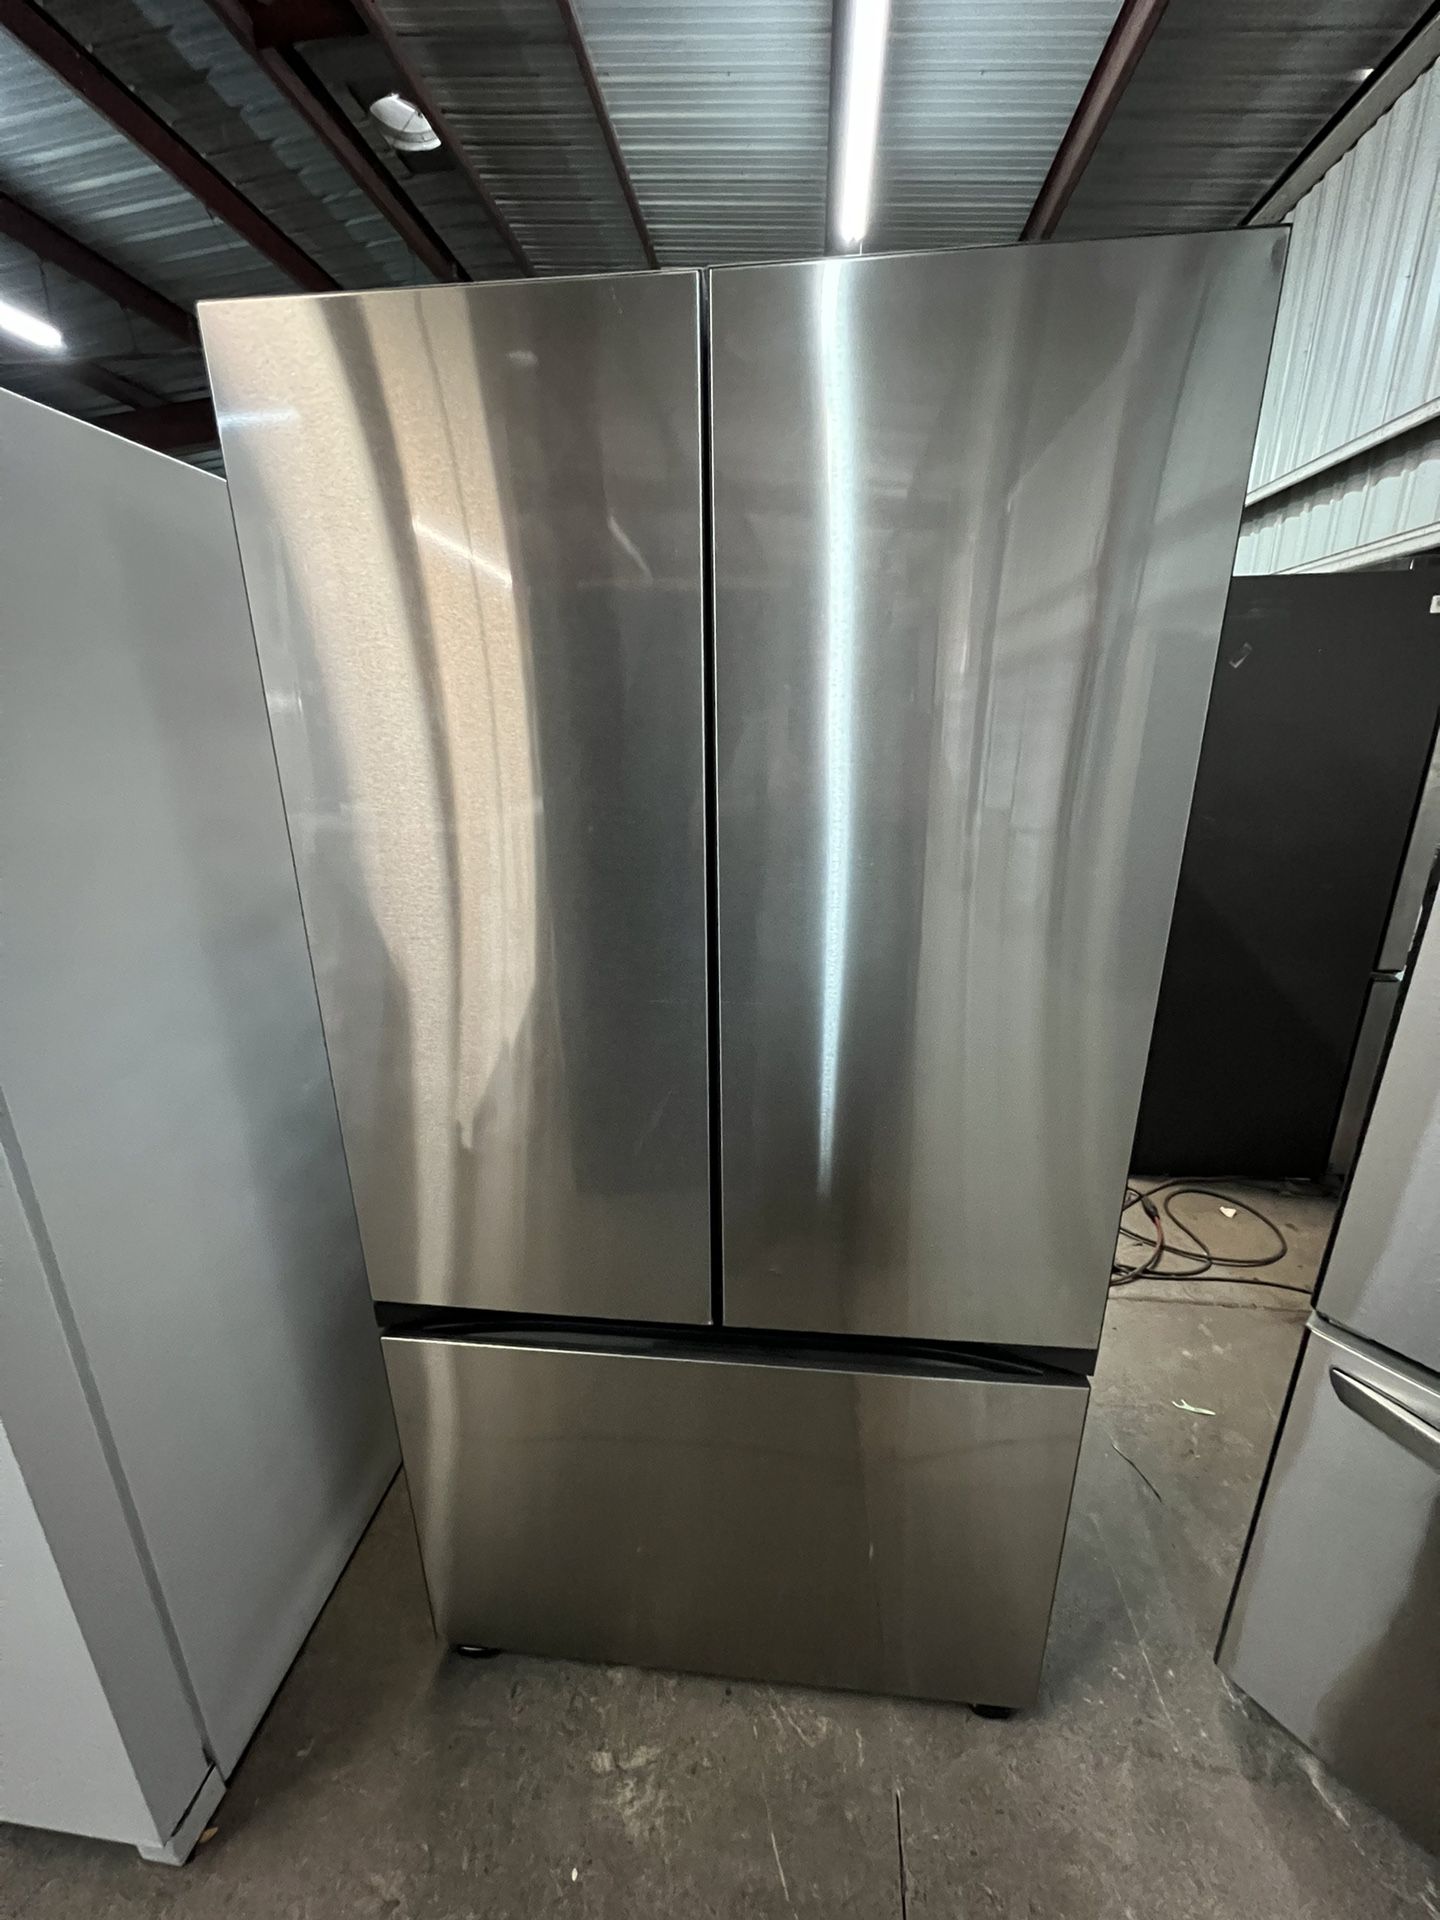 Samsung Mega Capacity Refrigerator